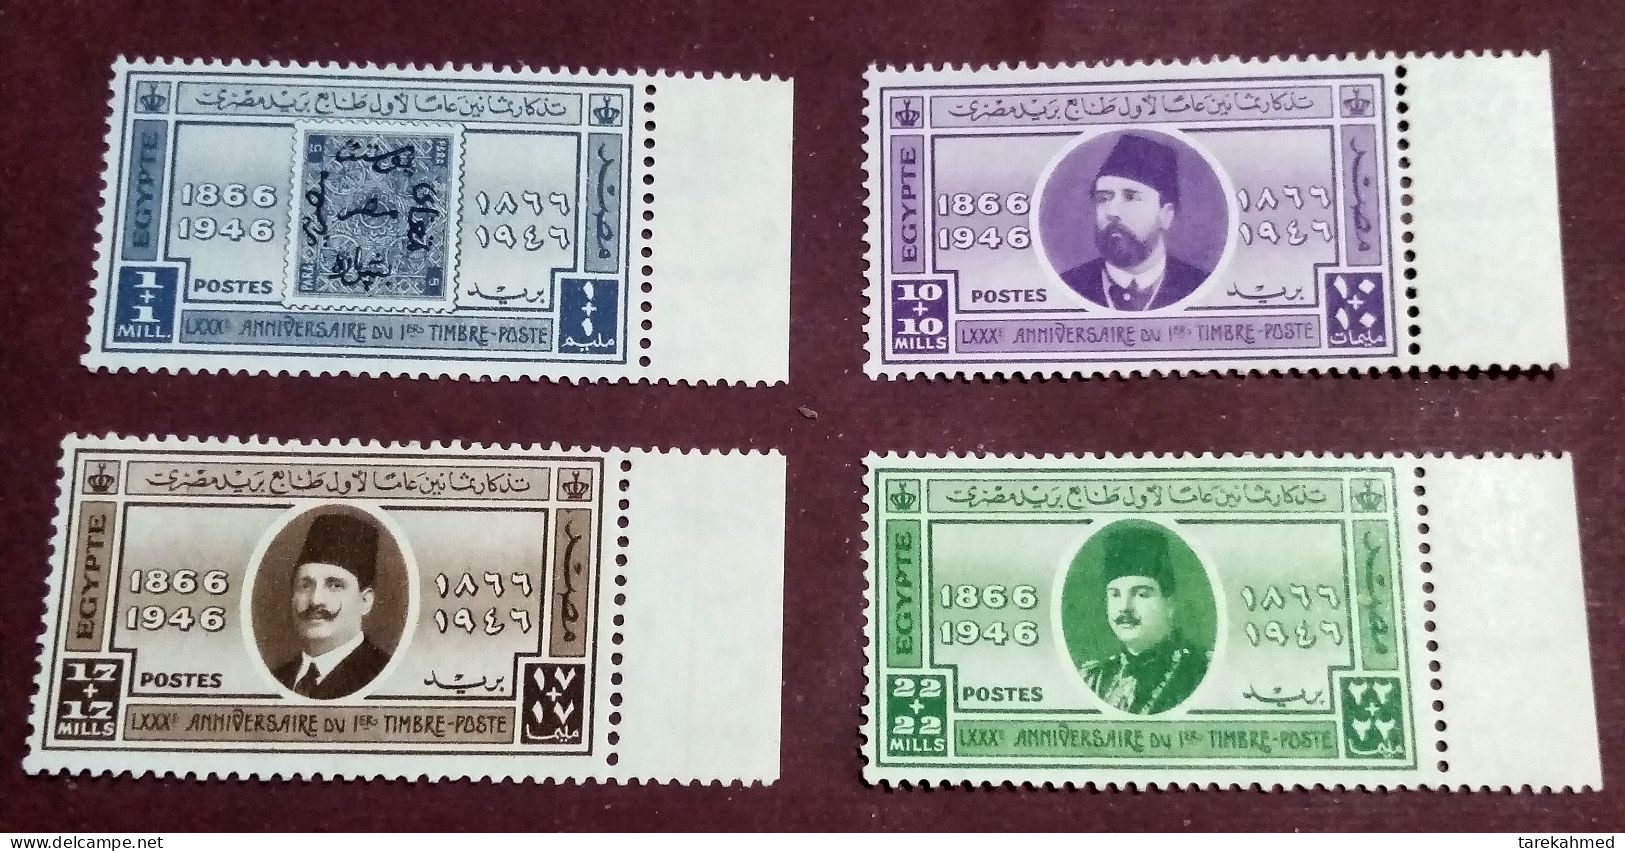 Egypt 1946 - Complete Set Of The 80th Anniv. Of Egypt’s 1st Postage Stamp - MNH With Margin, Original Gum. - Ongebruikt